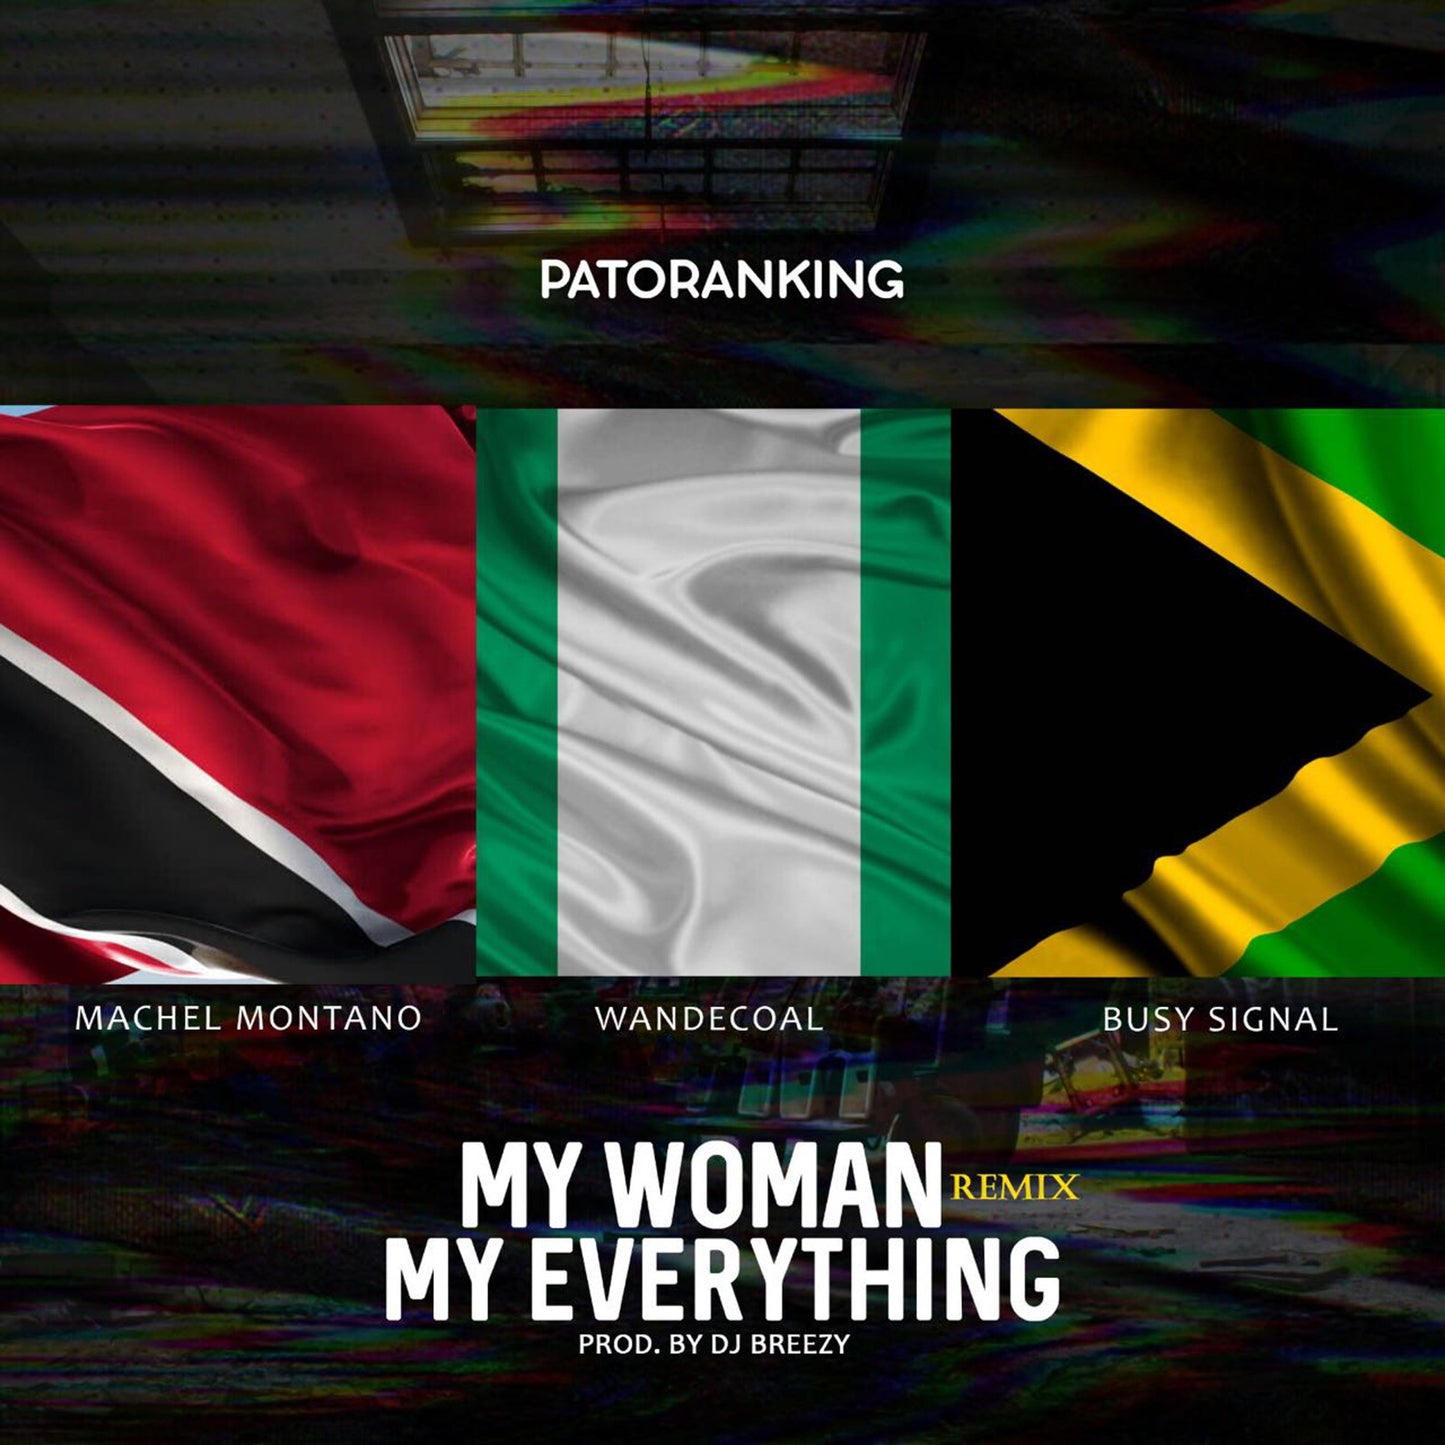 Patoranking - My Woman (Remix) ft. Wande Coal, Busy Signal, Machel Montano (Studio Acapella)